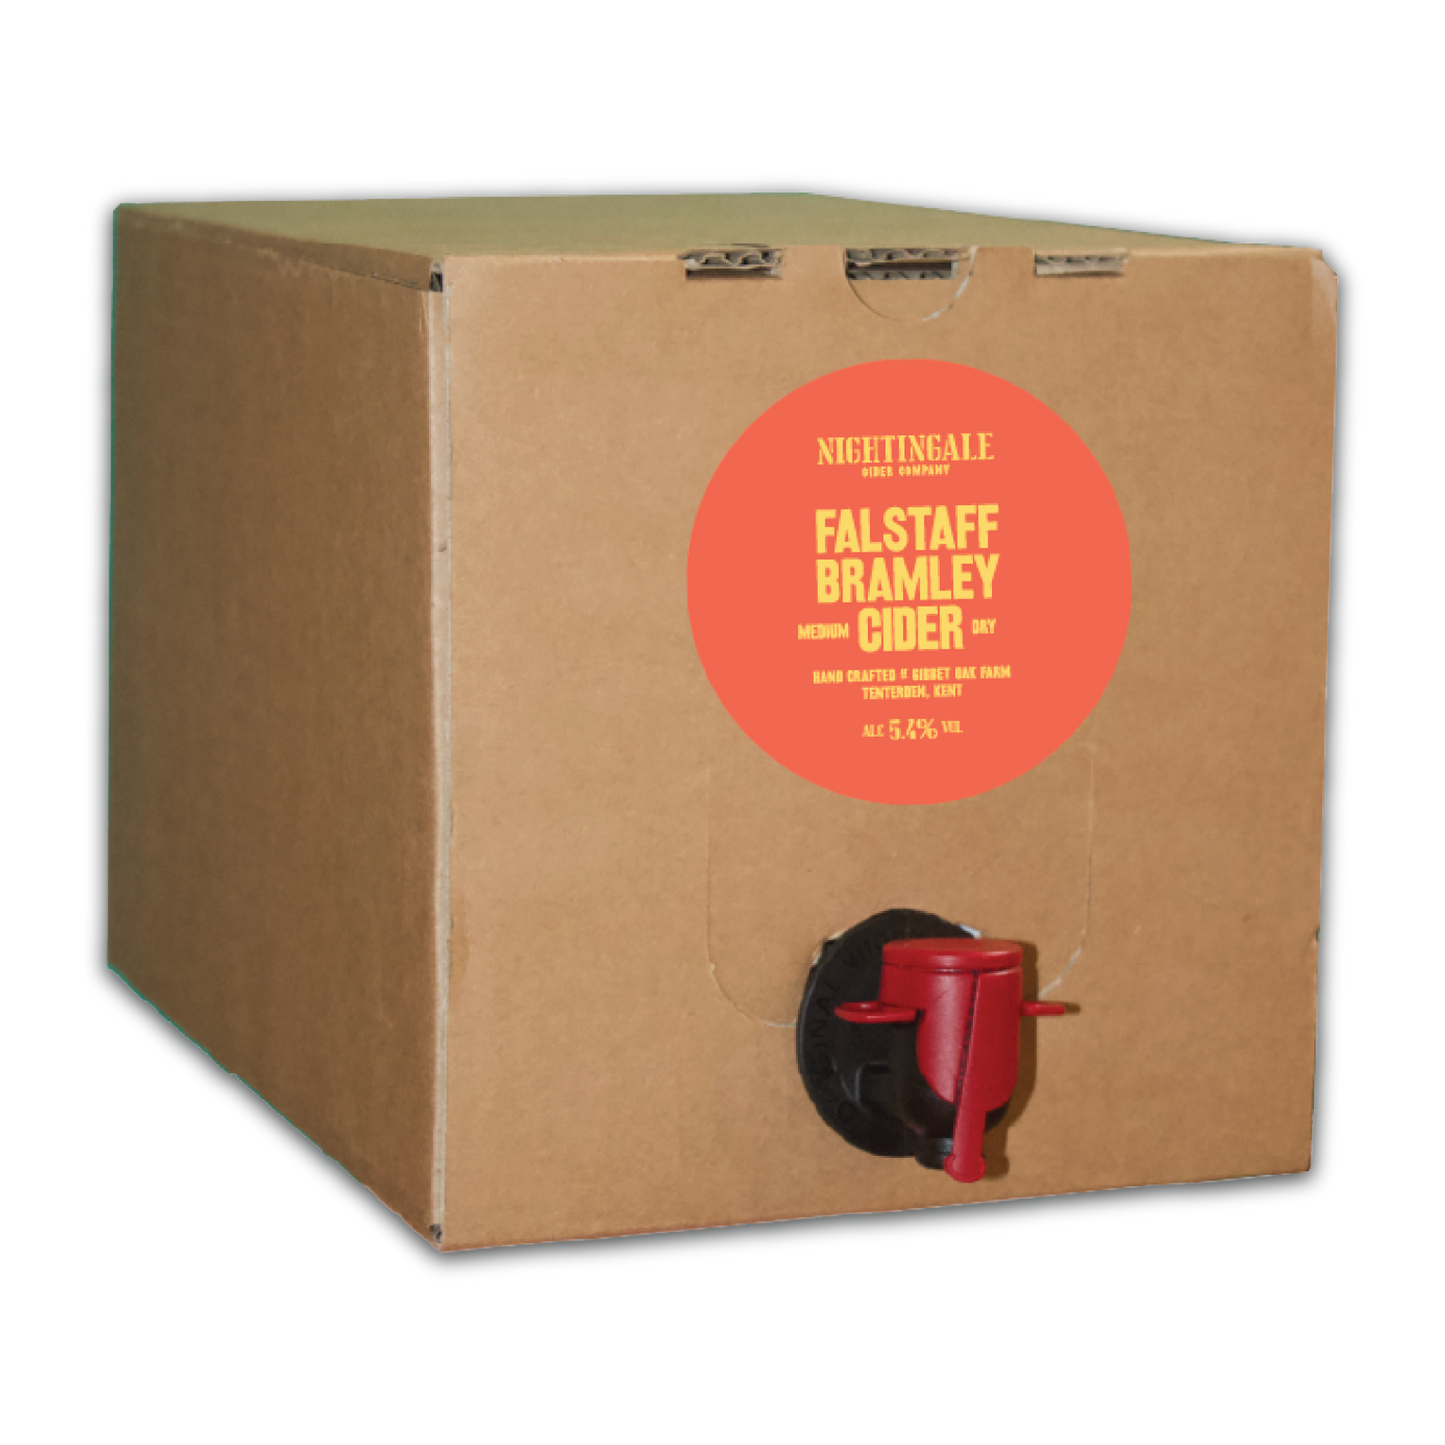 Falstaff Bramley cider bag in box